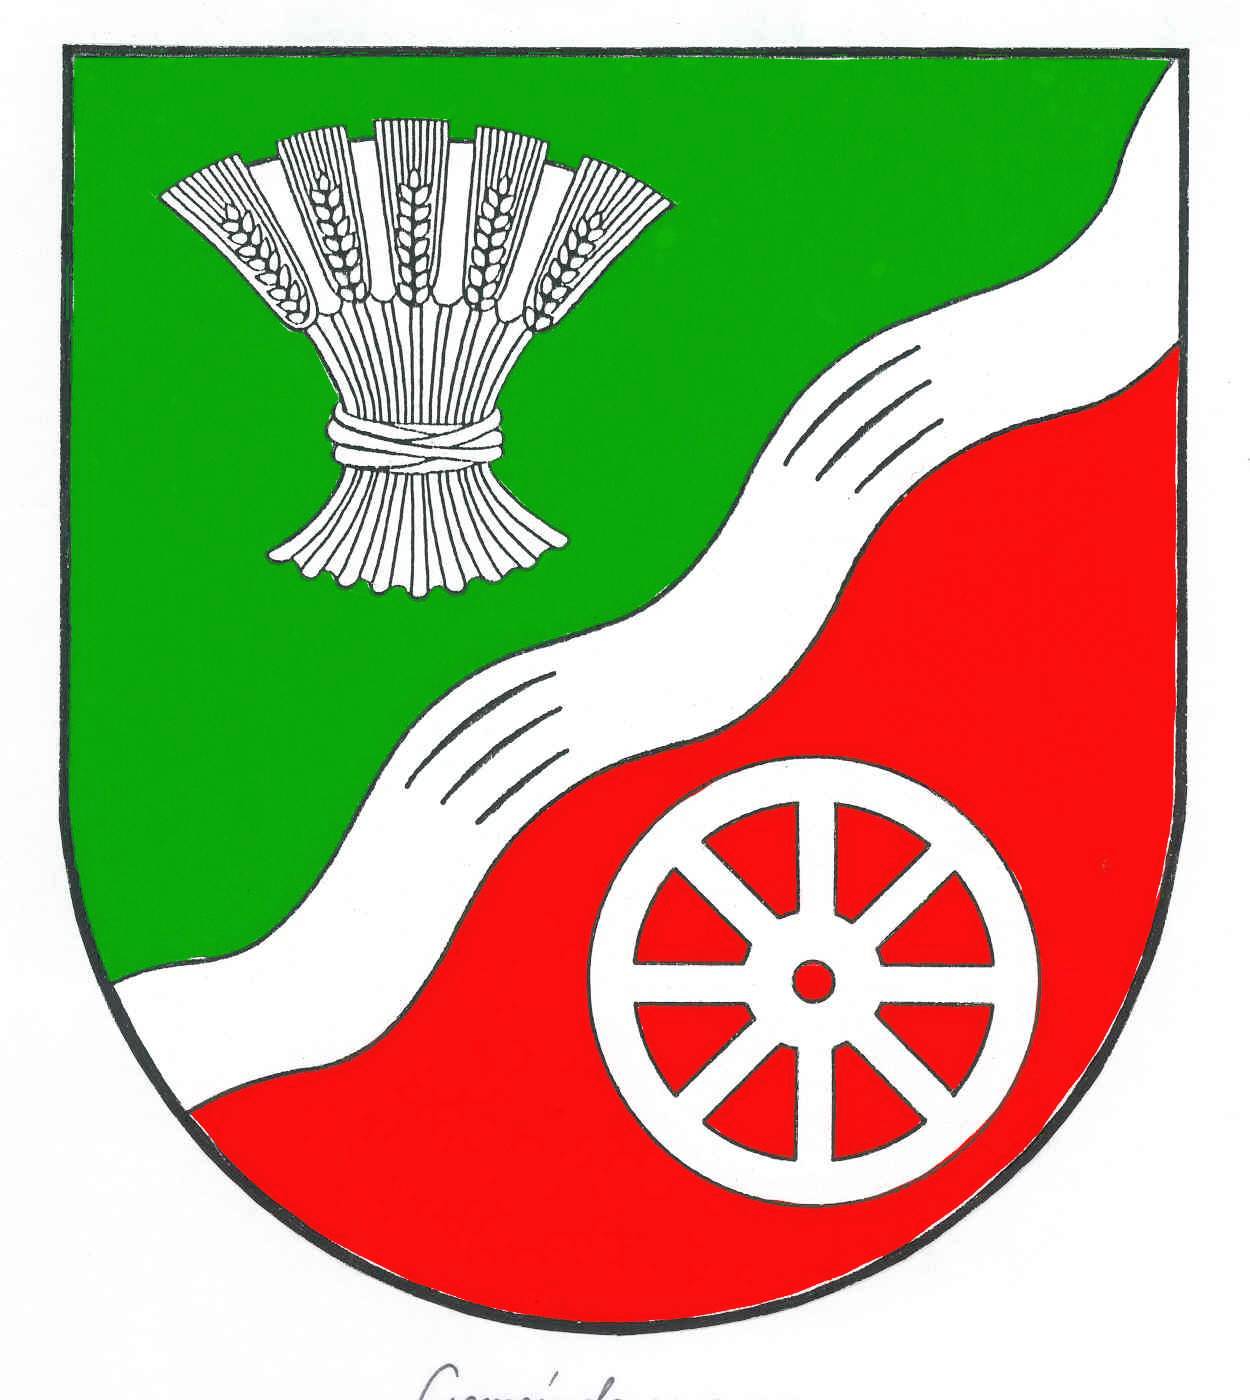 Wappen Gemeinde Wasbek, Kreis Rendsburg-Eckernförde